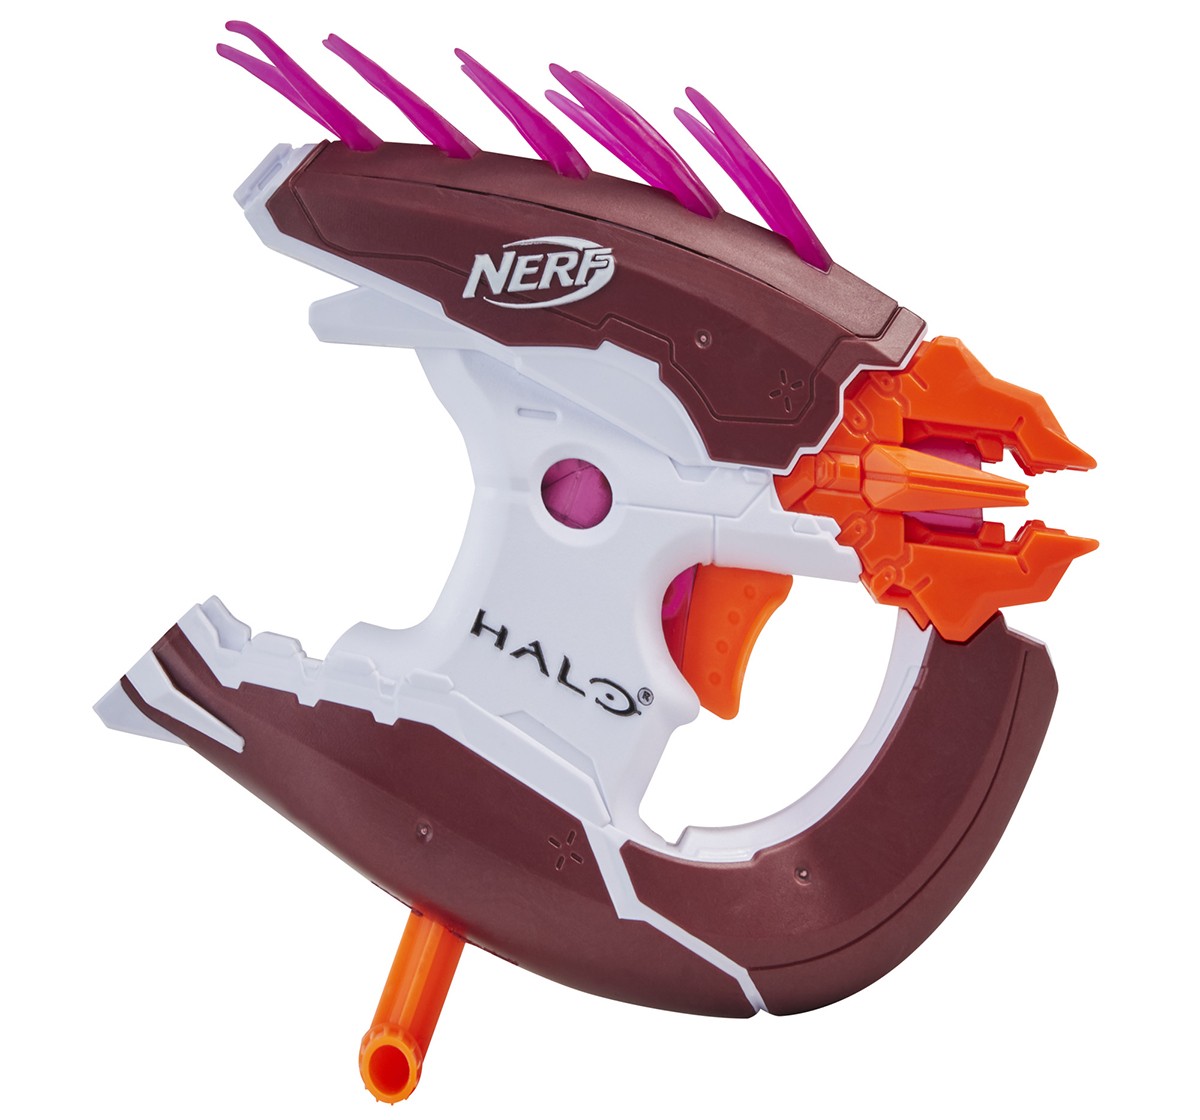 NERF MicroShots Halo Needler Blaster with 2 NERF Darts, Multicolor, 8Y+